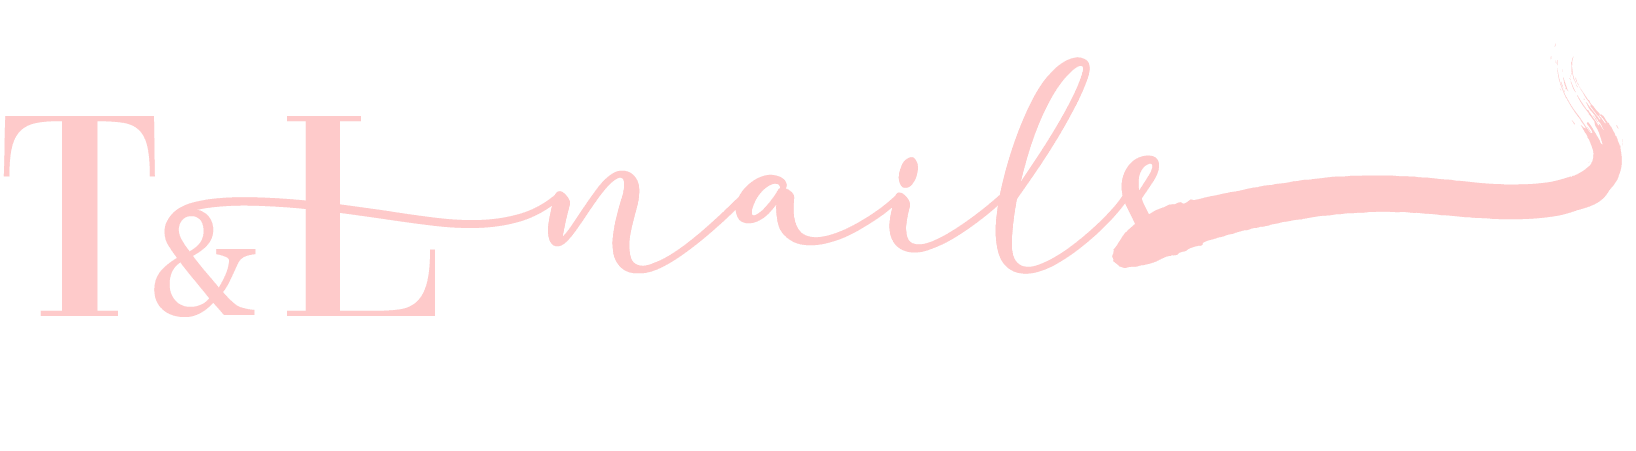 T&L Nails Logo